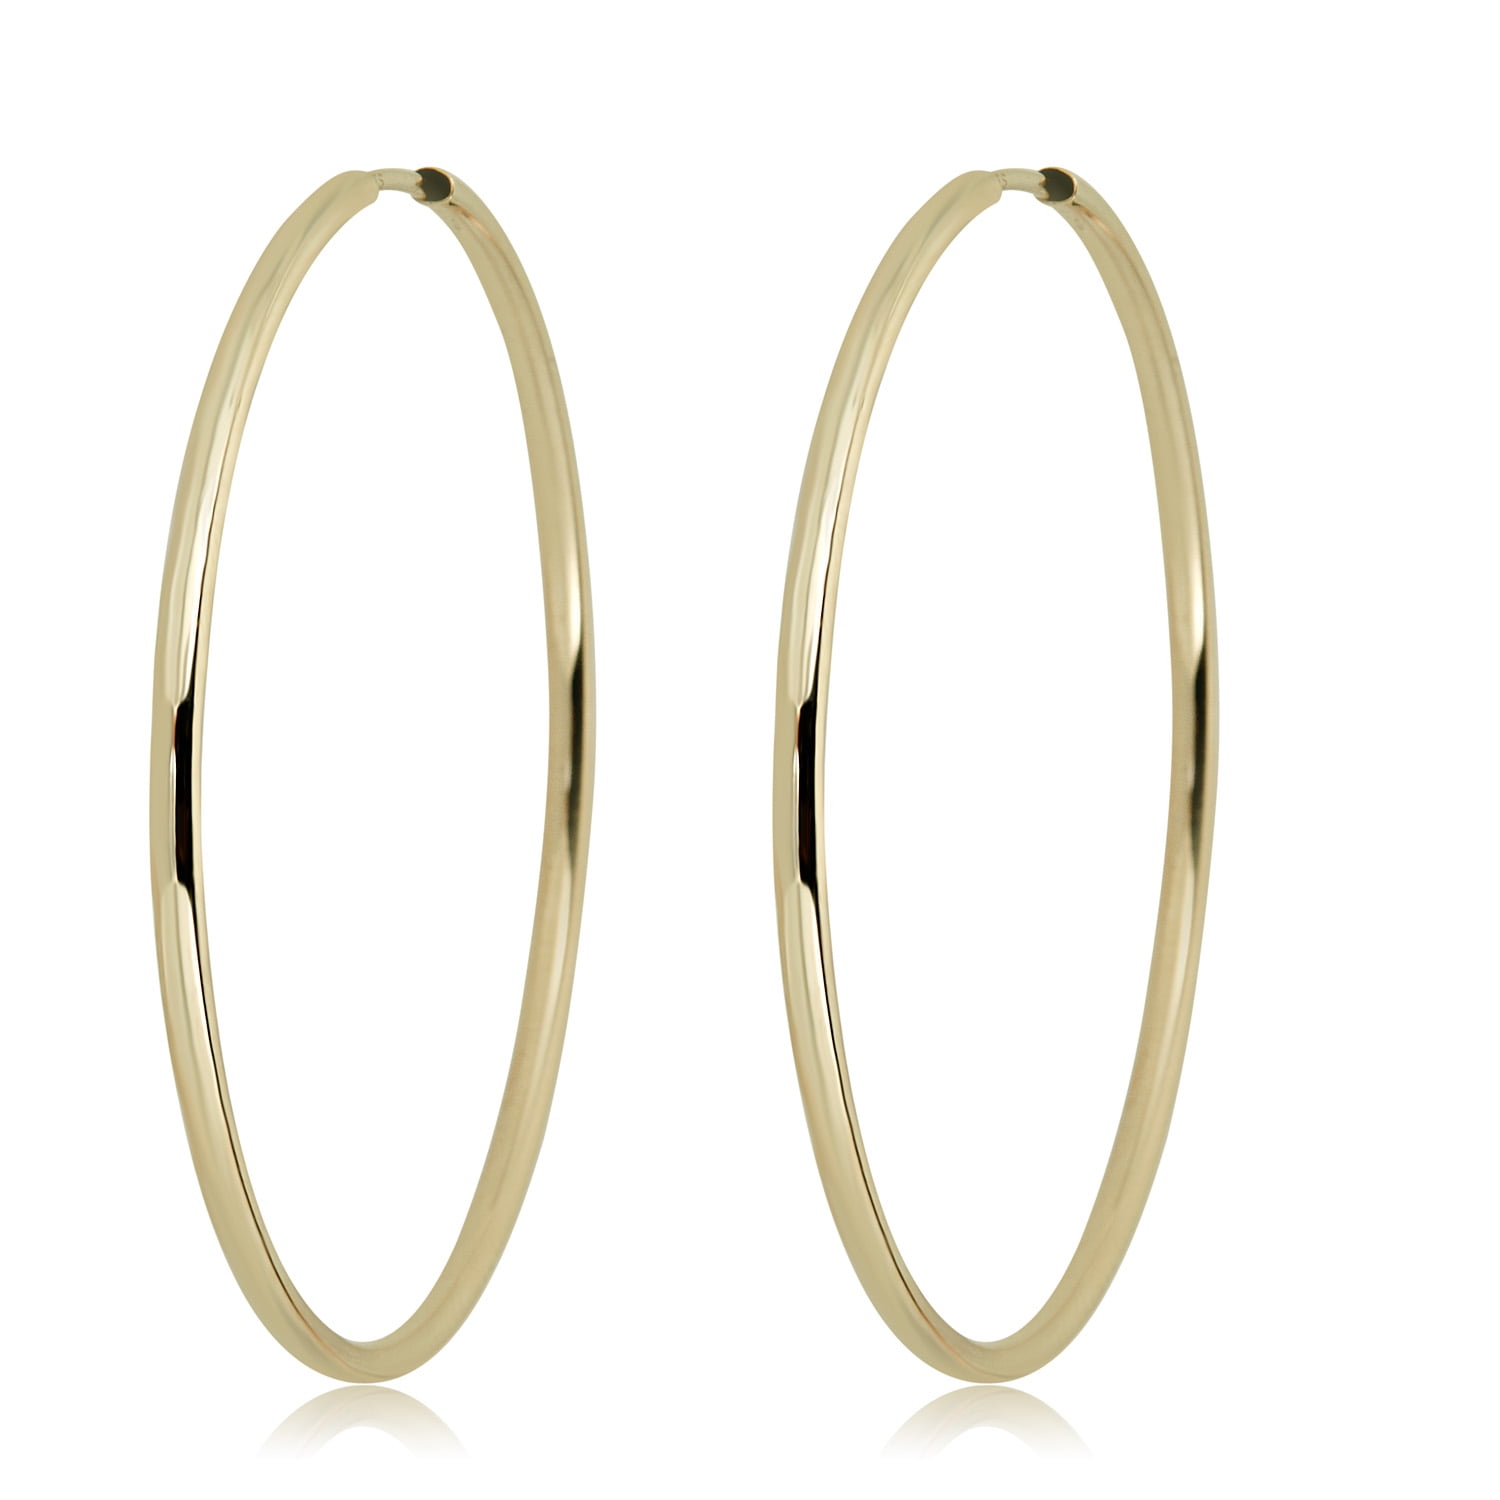 6 Sizes Genuine 14K Gold Stunning Plain Polished Hoop Earrings 